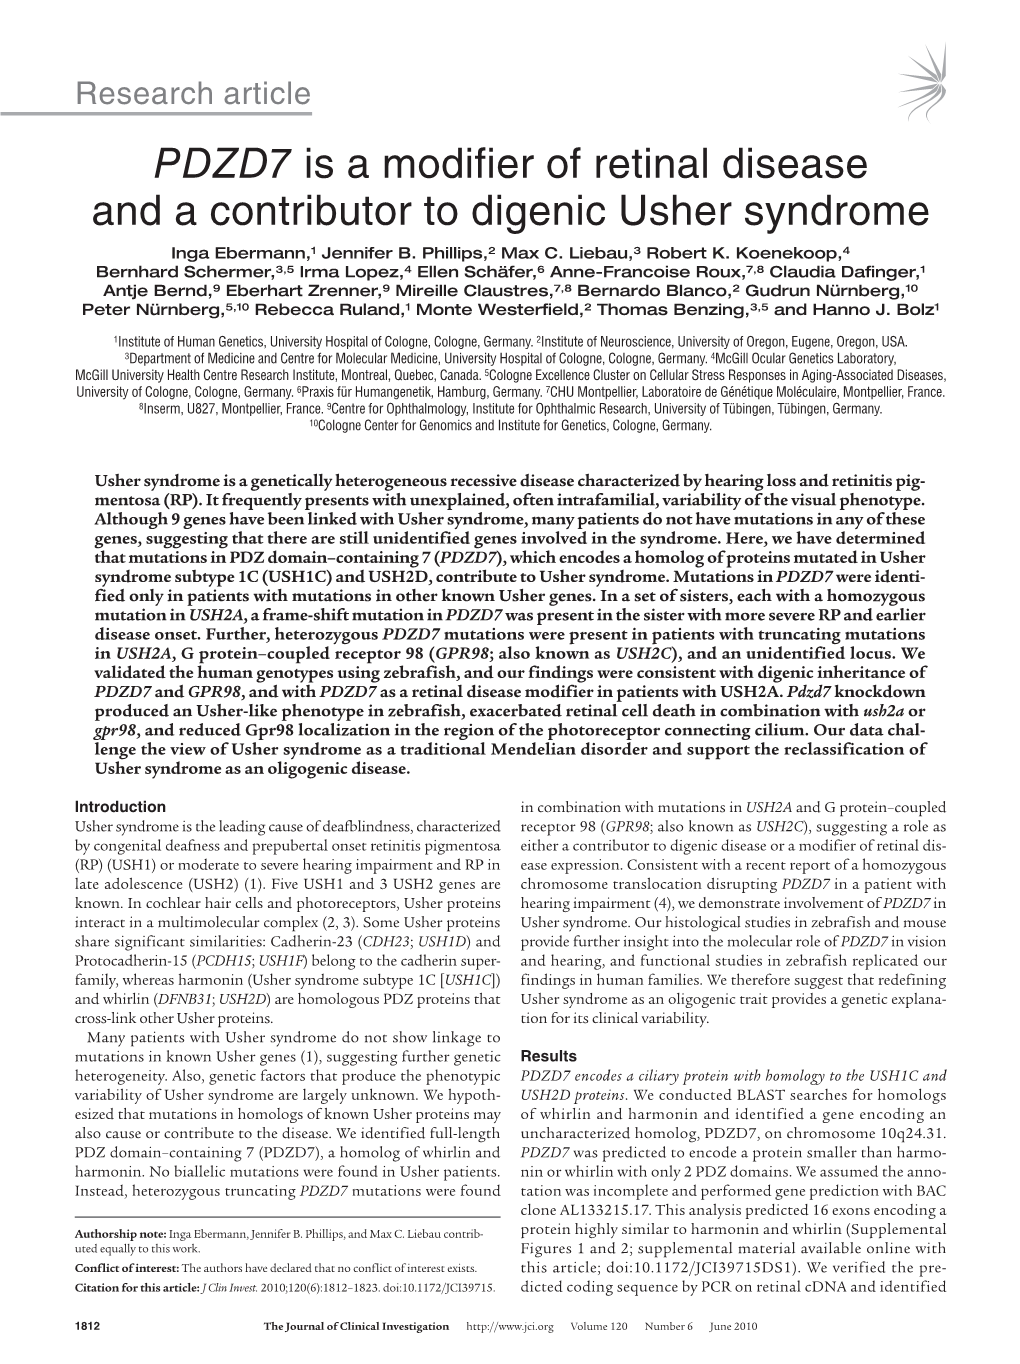 PDZD7 Is a Modifier of Retinal Disease and a Contributor to Digenic Usher Syndrome Inga Ebermann,1 Jennifer B